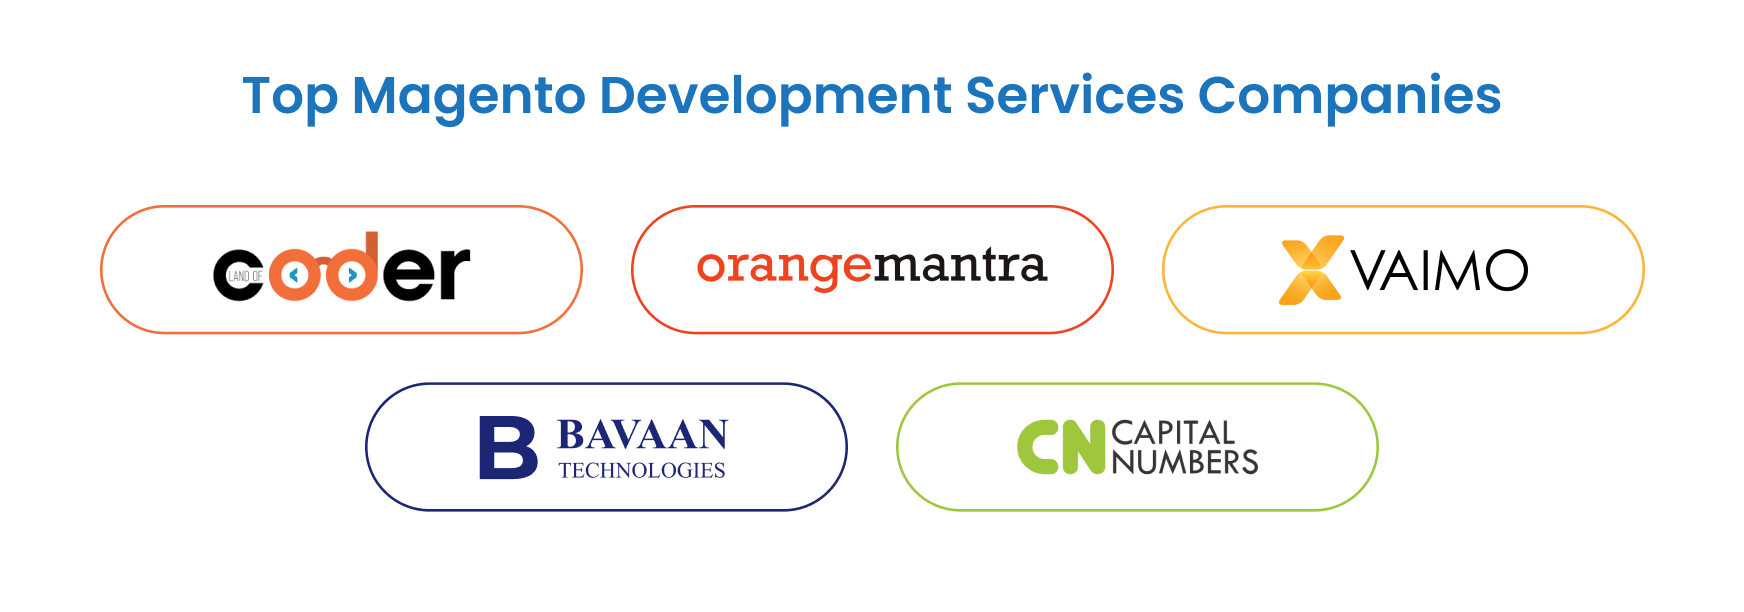 Top Magento Development Services Companies